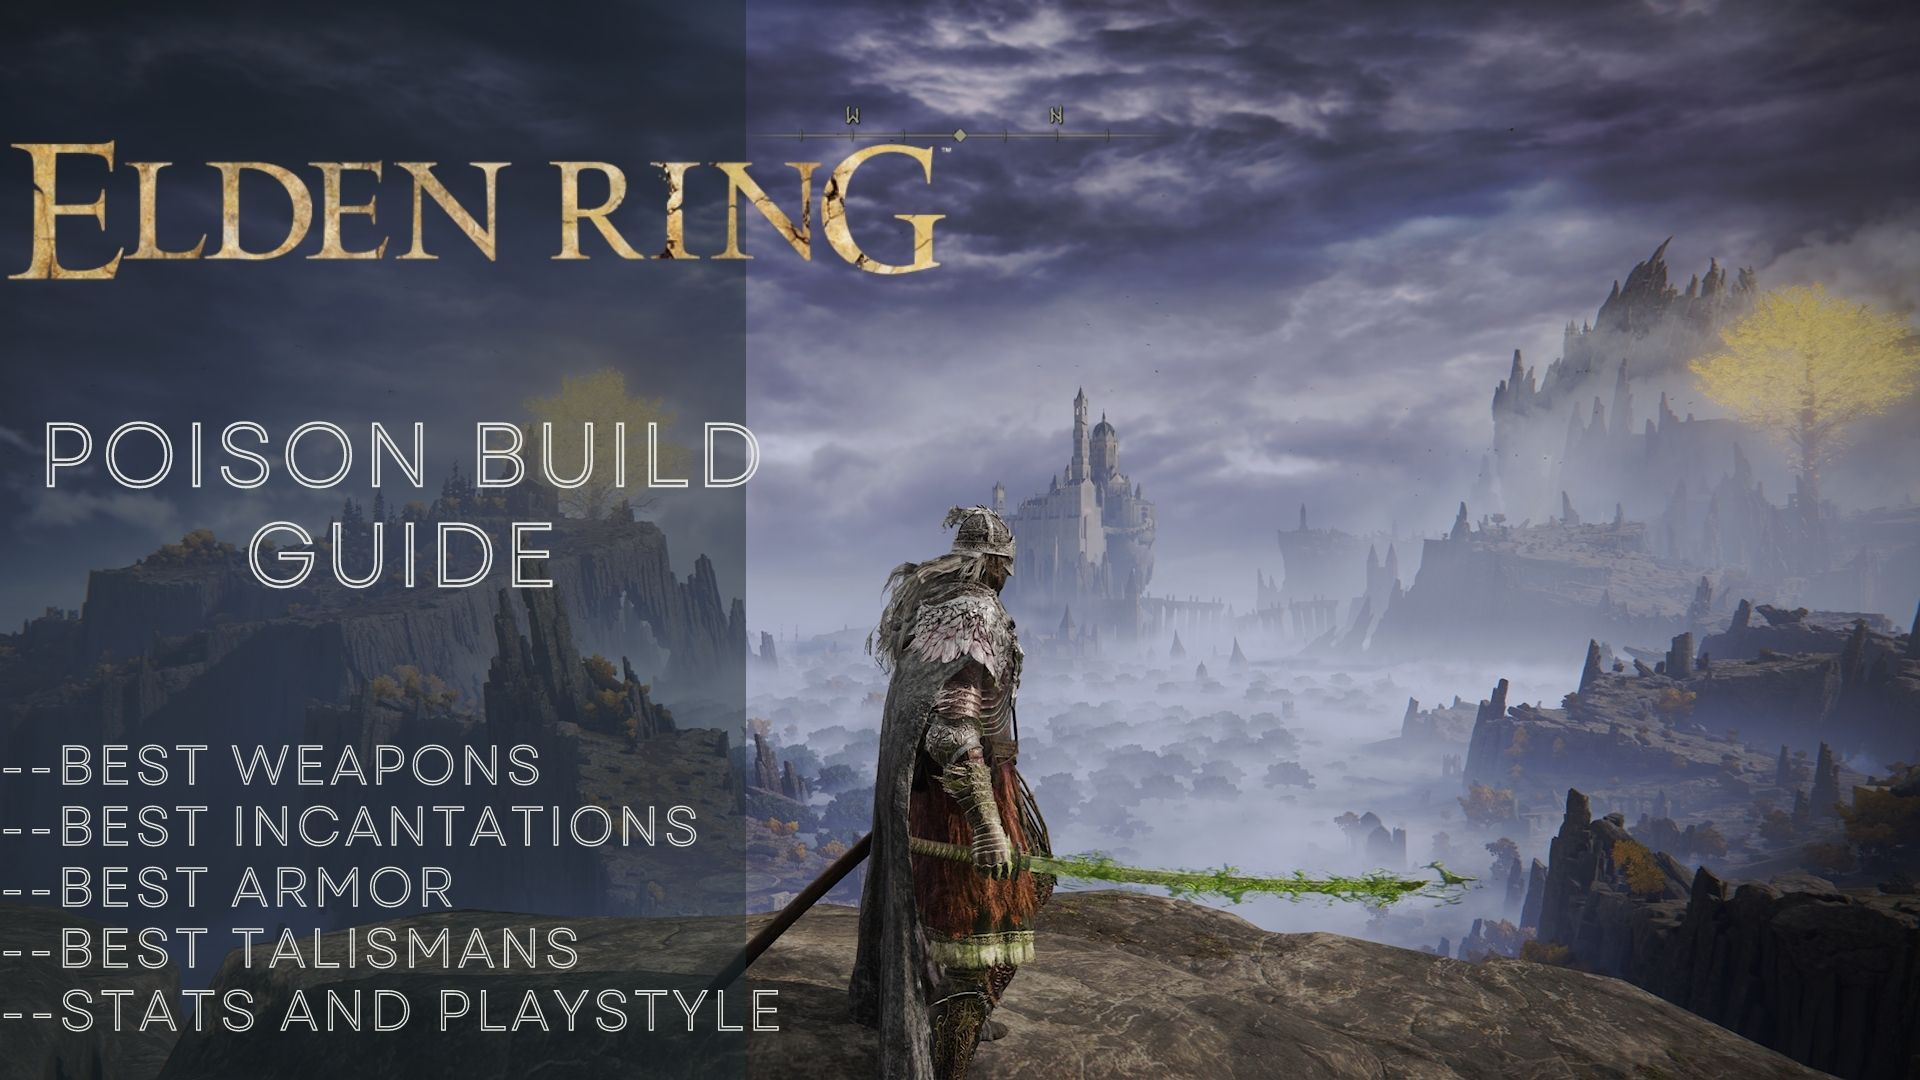 The BEST Elden Ring Poison Build